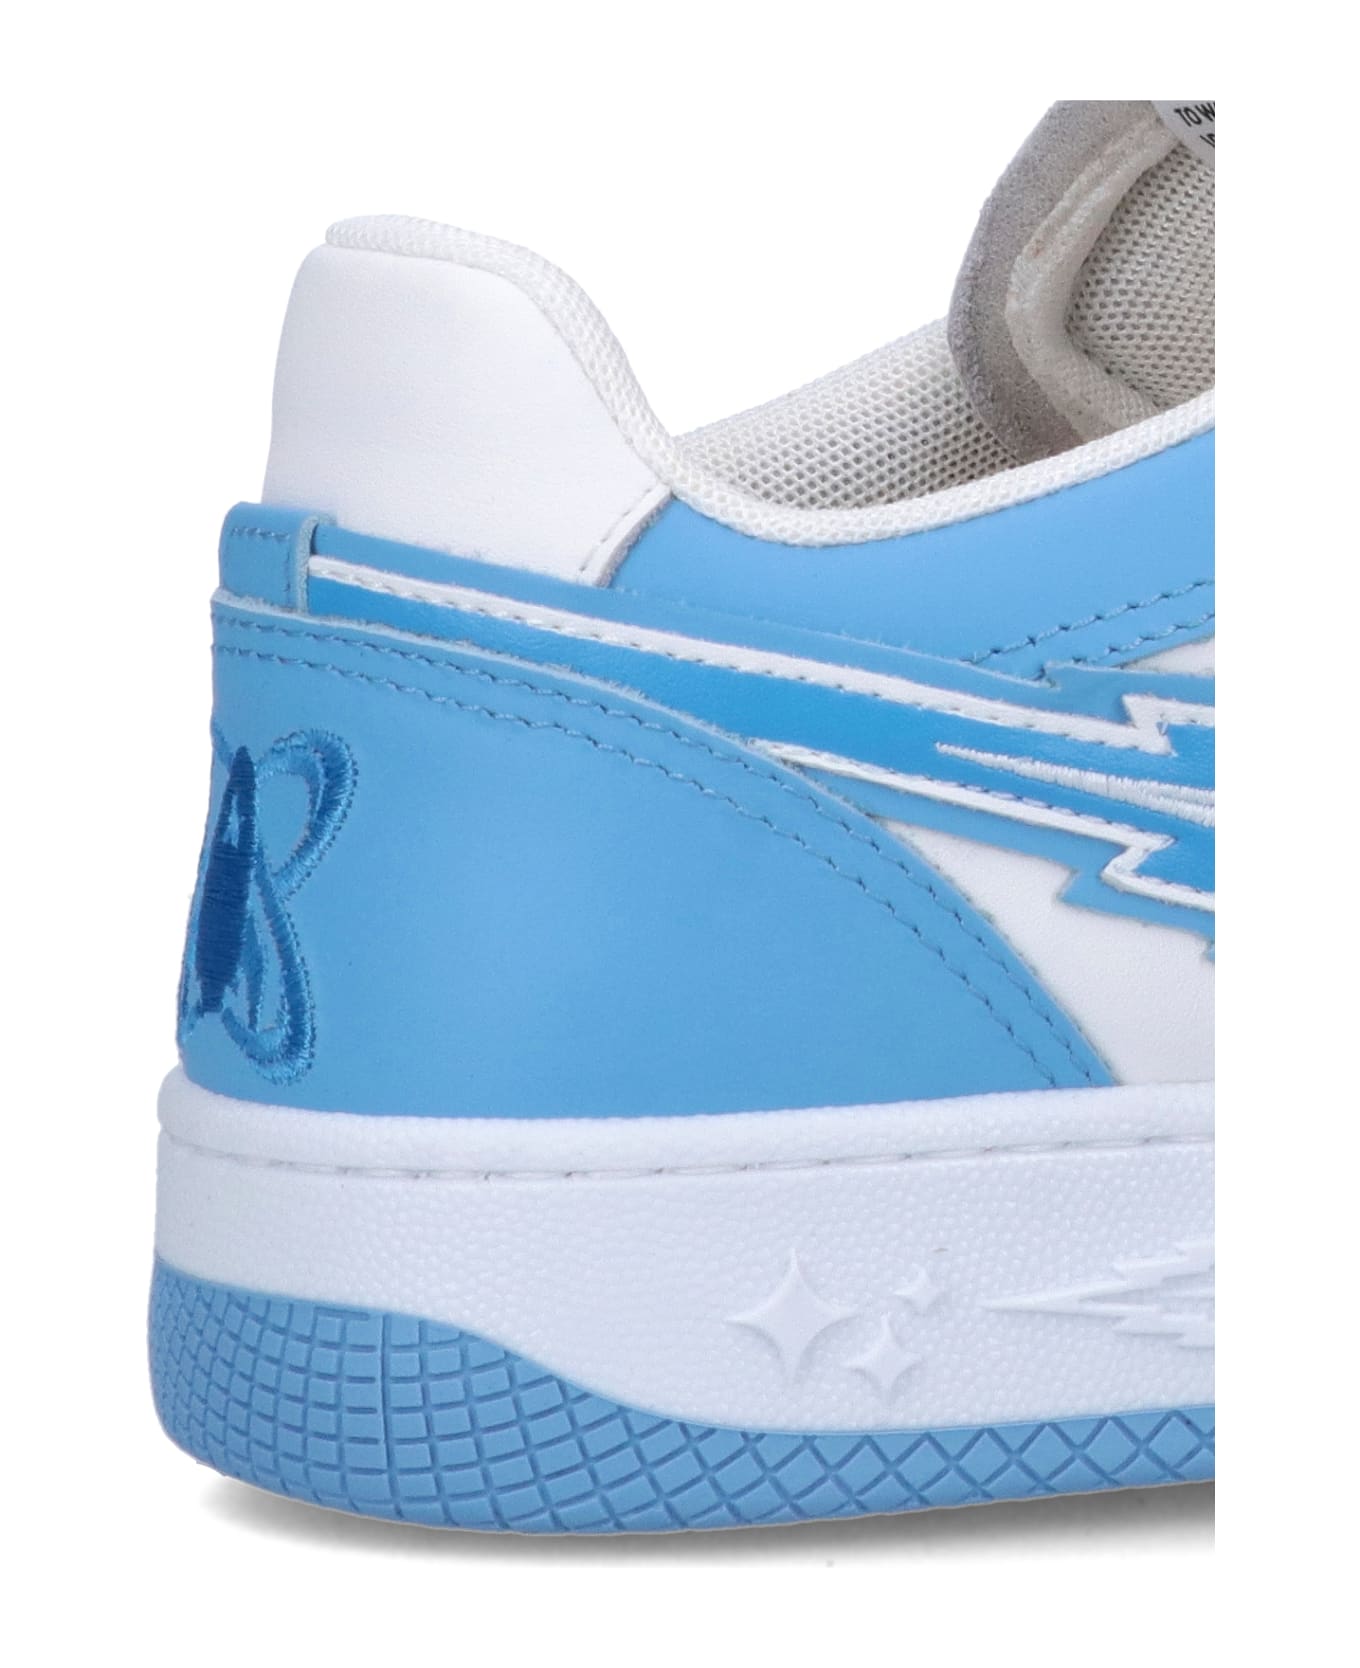 Enterprise Japan Sneakers - Light blue